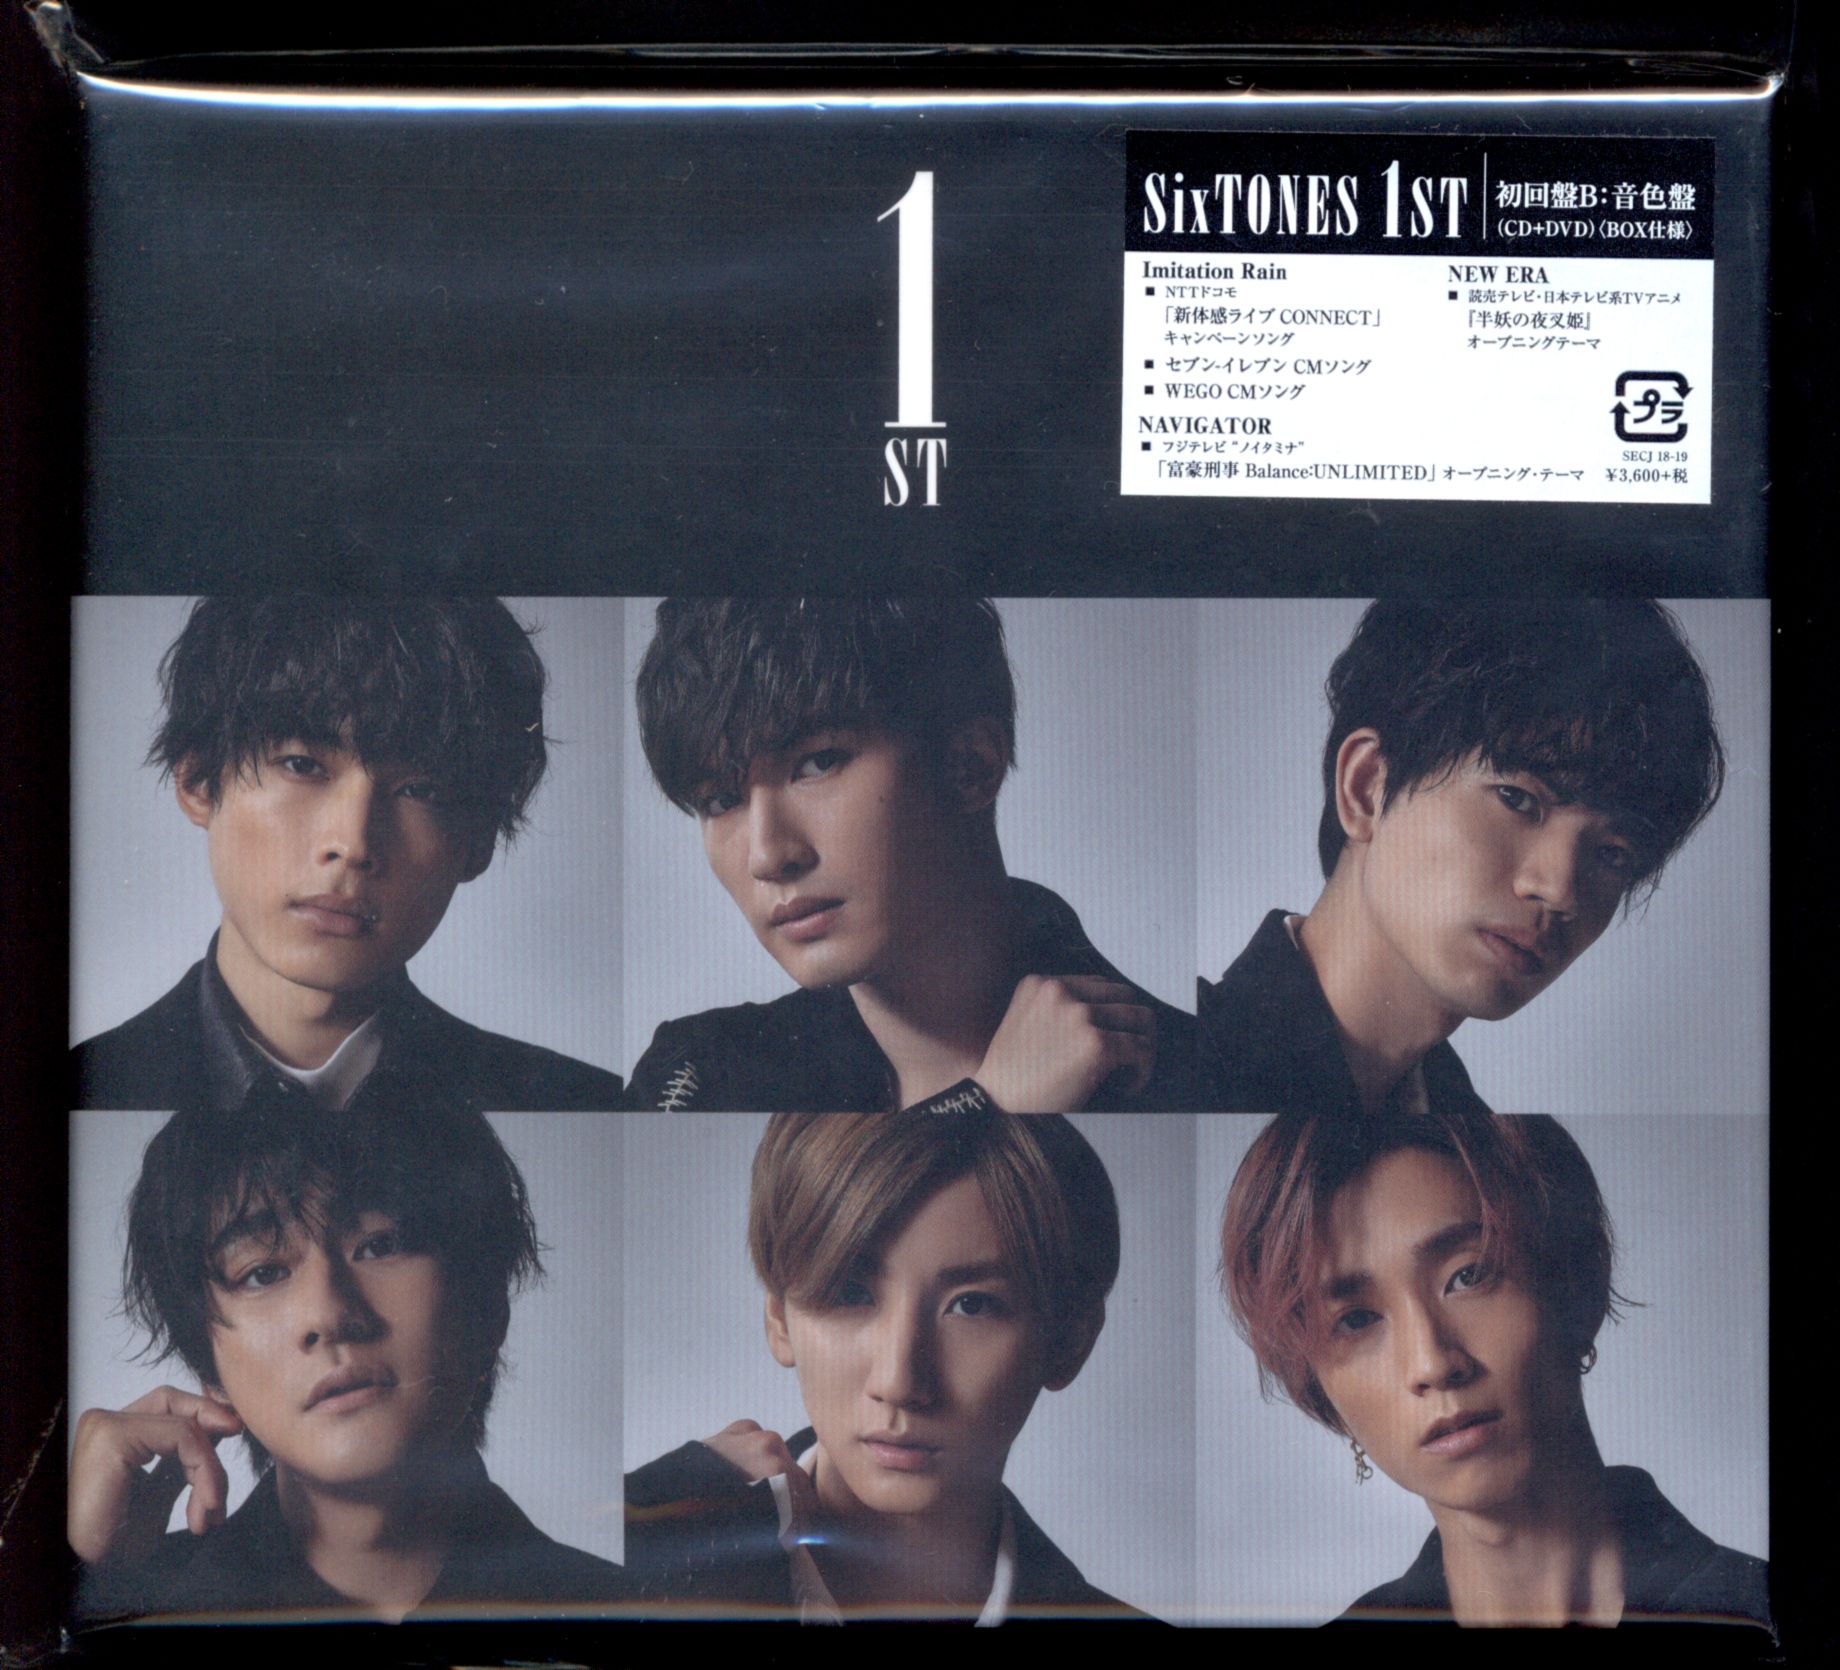 SixTONES 1ST 音色盤 *CD+DVD ユニット曲3曲/ユニット曲MV収録 